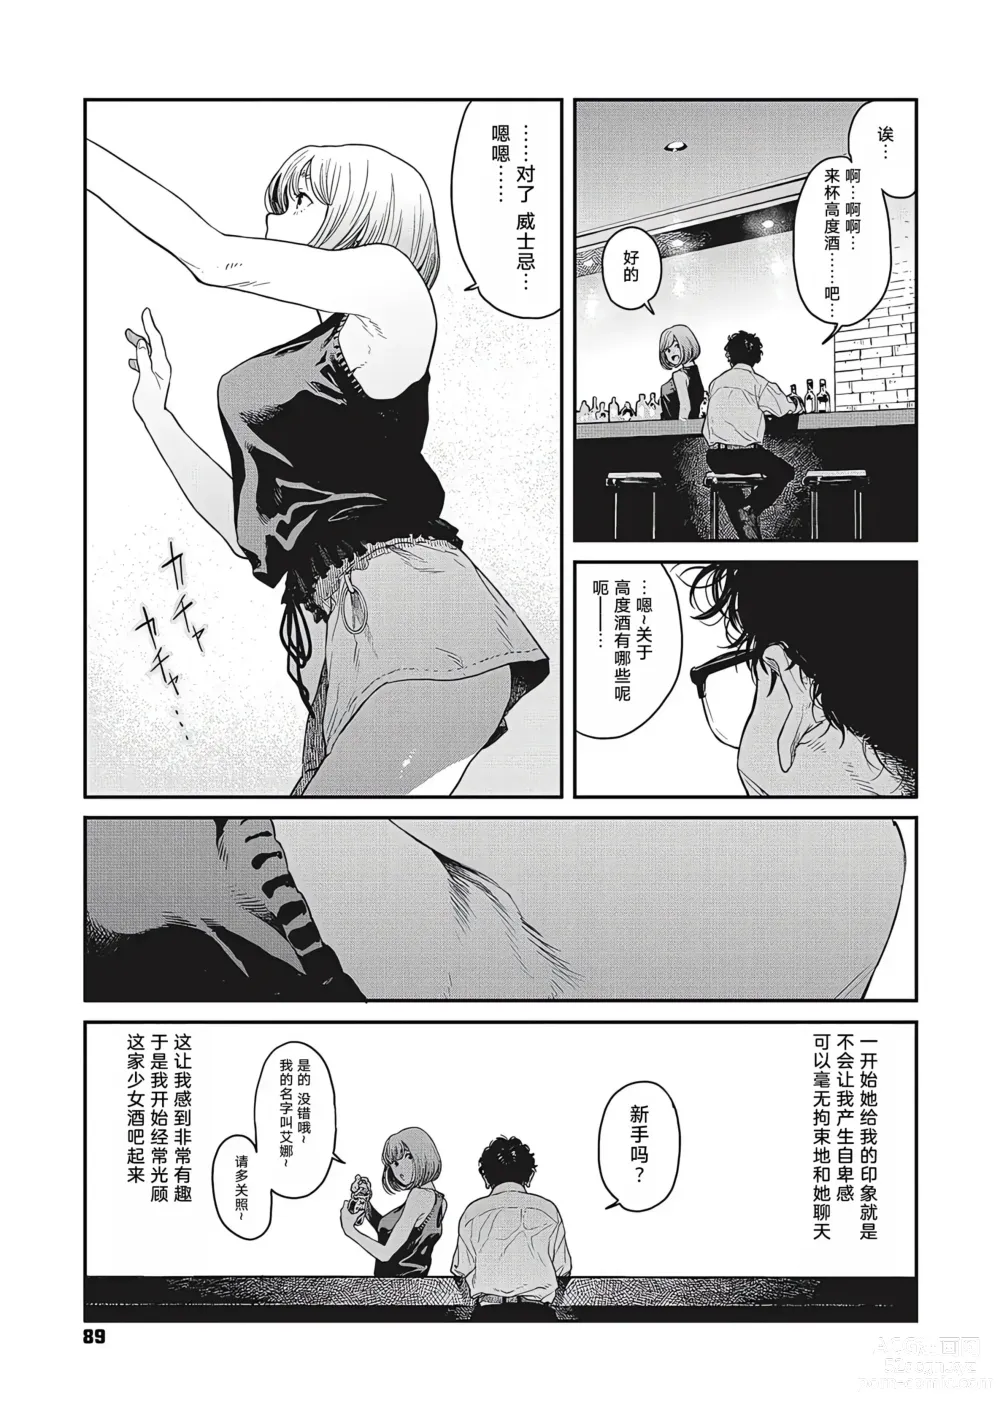 Page 3 of manga 雨夜里